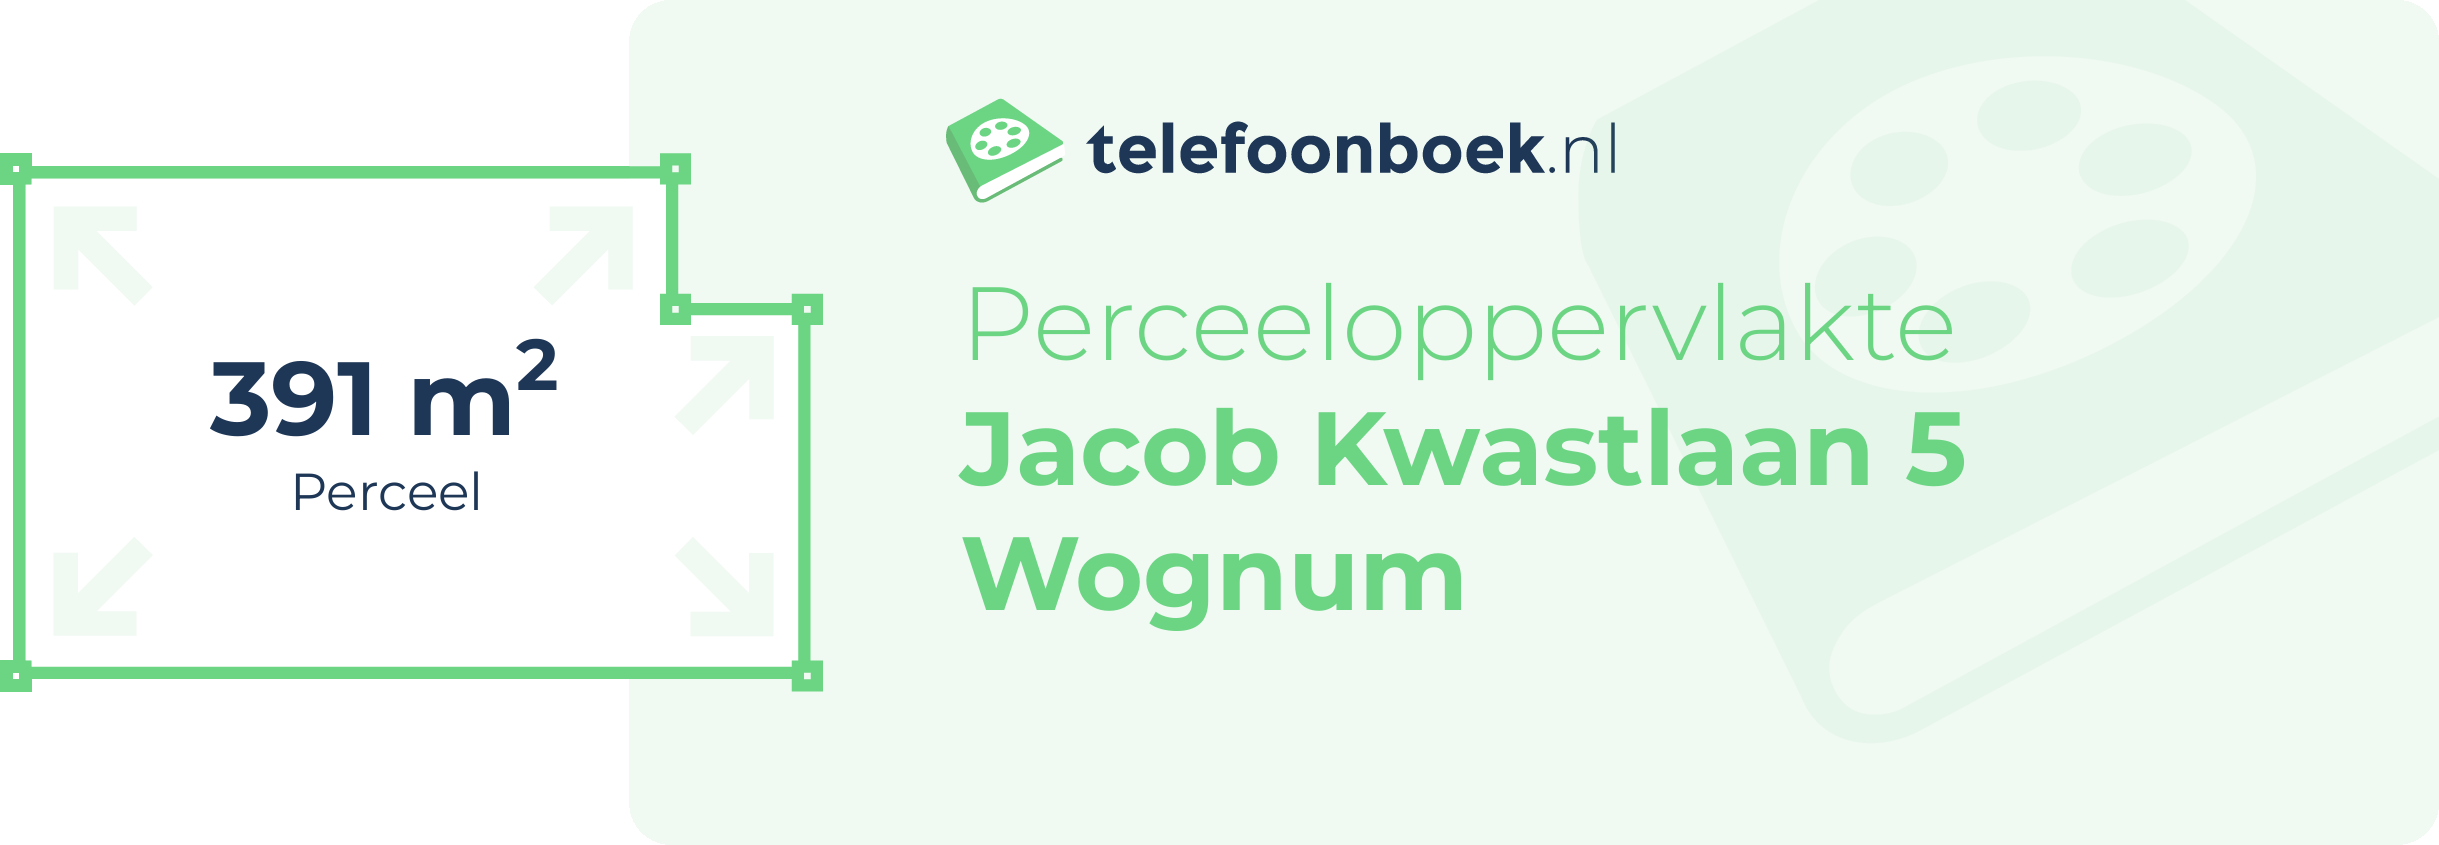 Perceeloppervlakte Jacob Kwastlaan 5 Wognum